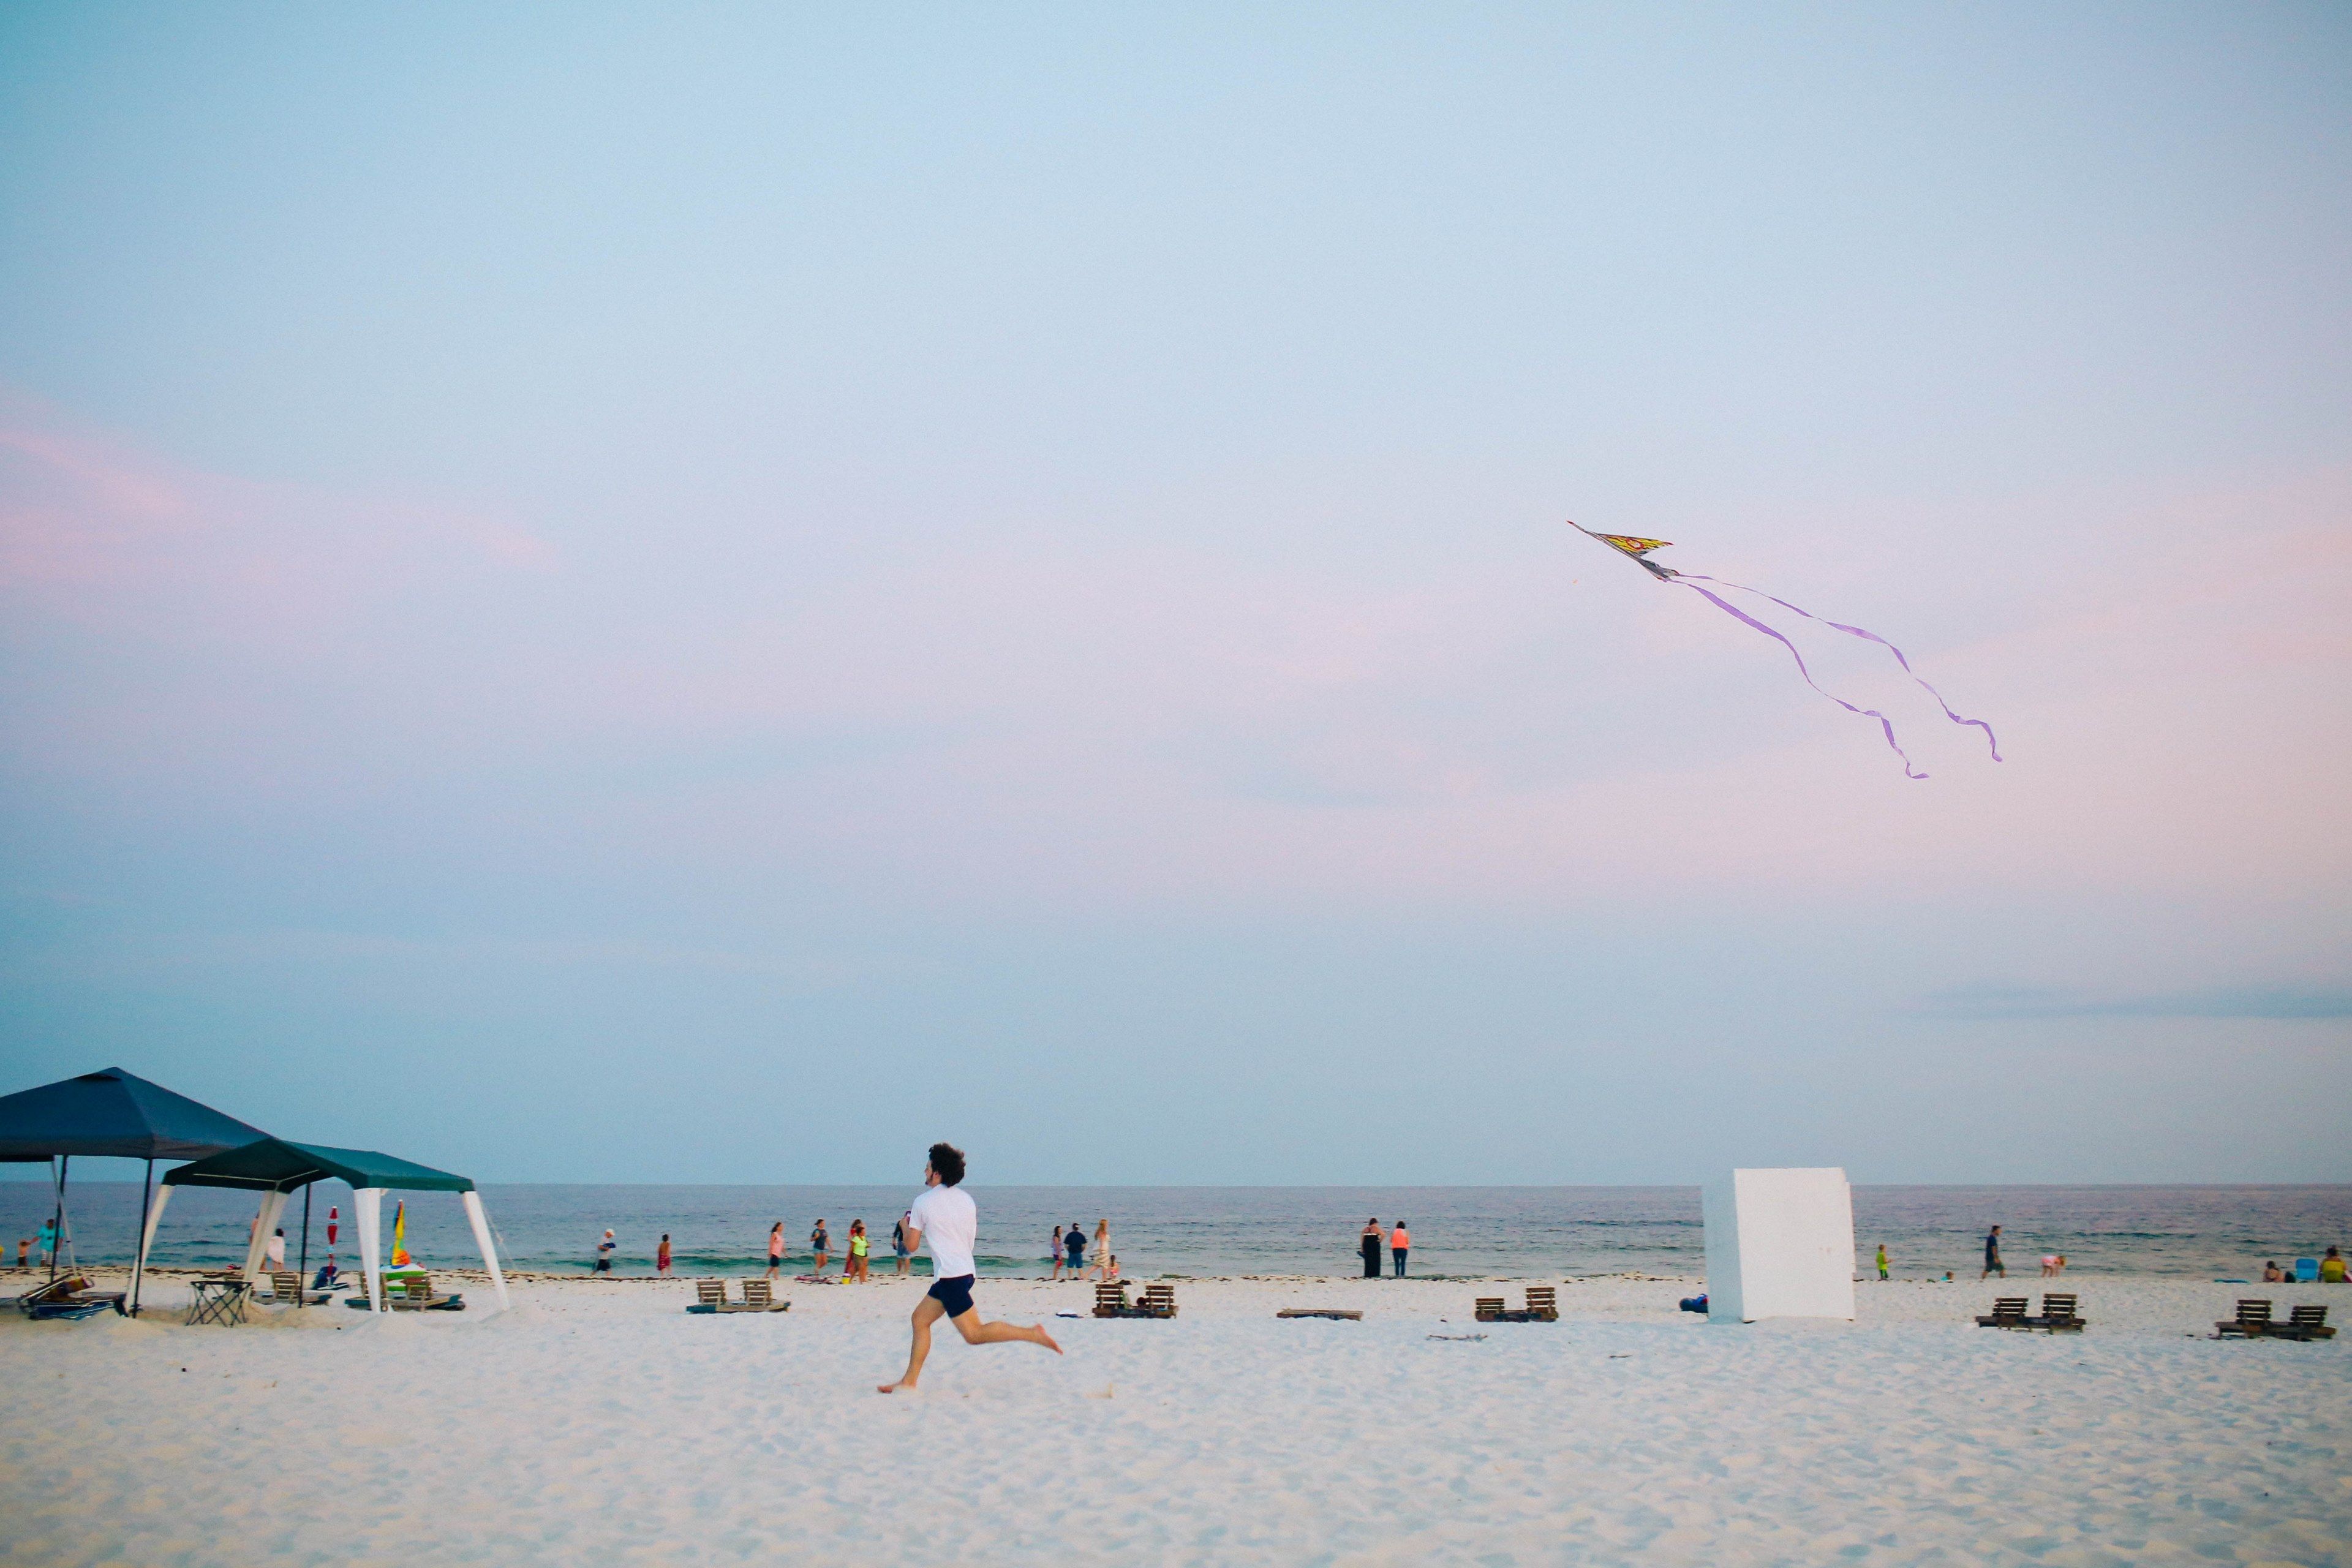 happy summer seaside activity and flying kite at the beachkite